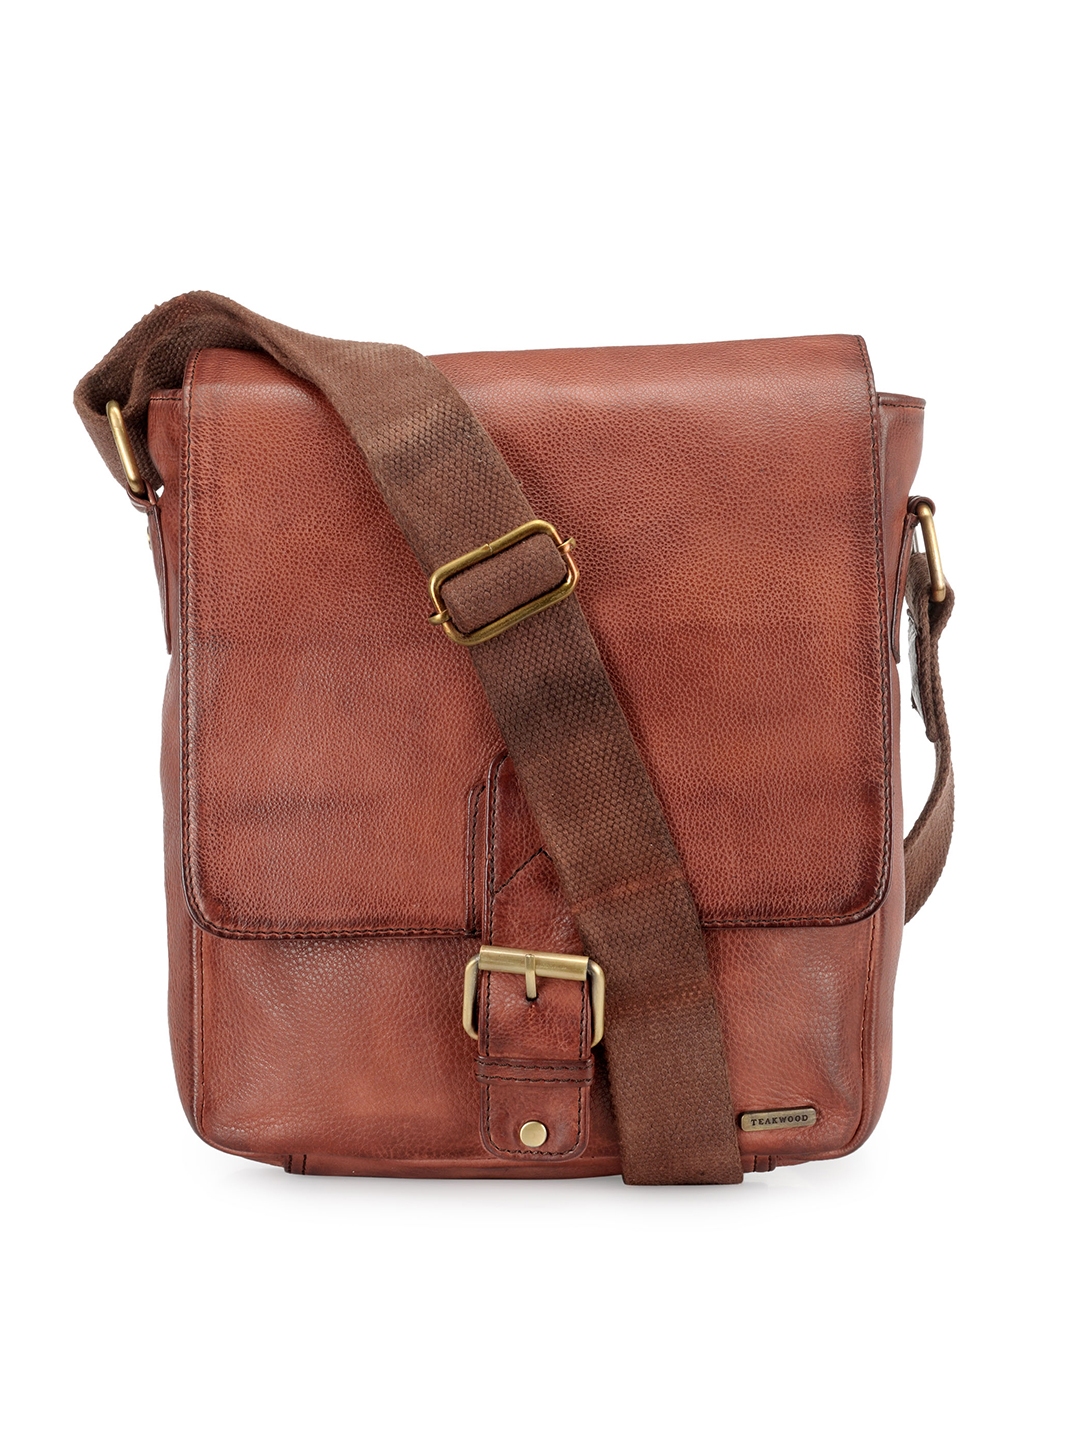 Buy Teakwood Leathers Unisex Tan Solid Leather Messenger Bag ...